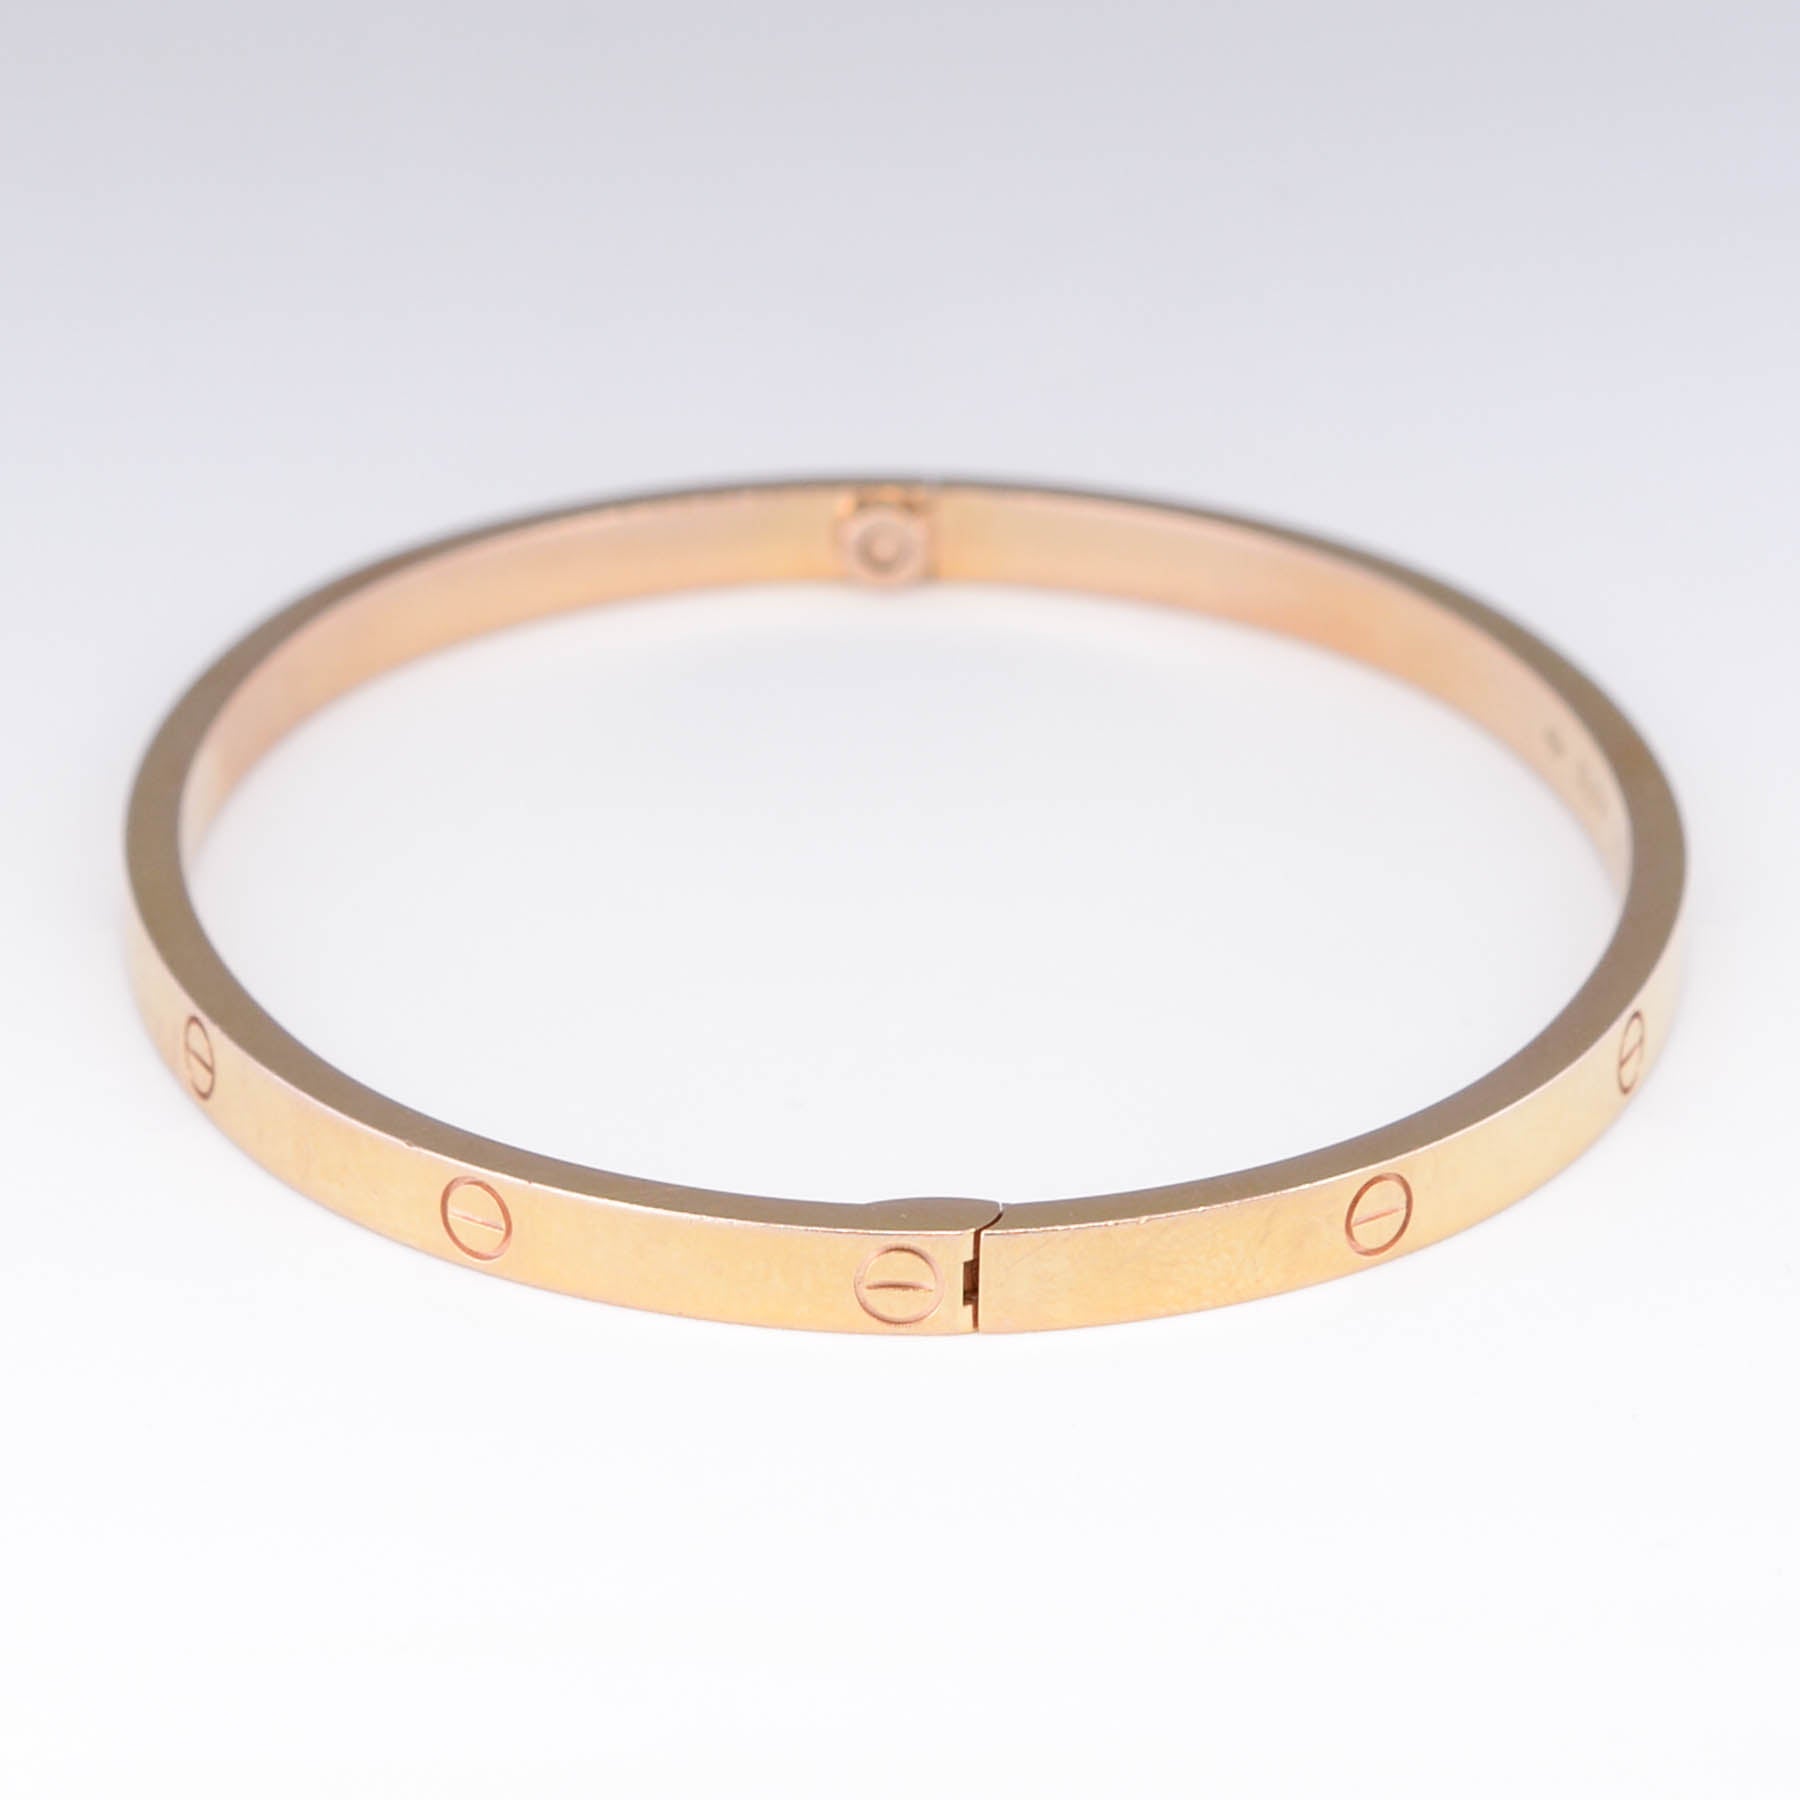 'Cartier' Love Bracelet in Yellow Gold | Small Model | 18k | Size 18 - 100 Ways